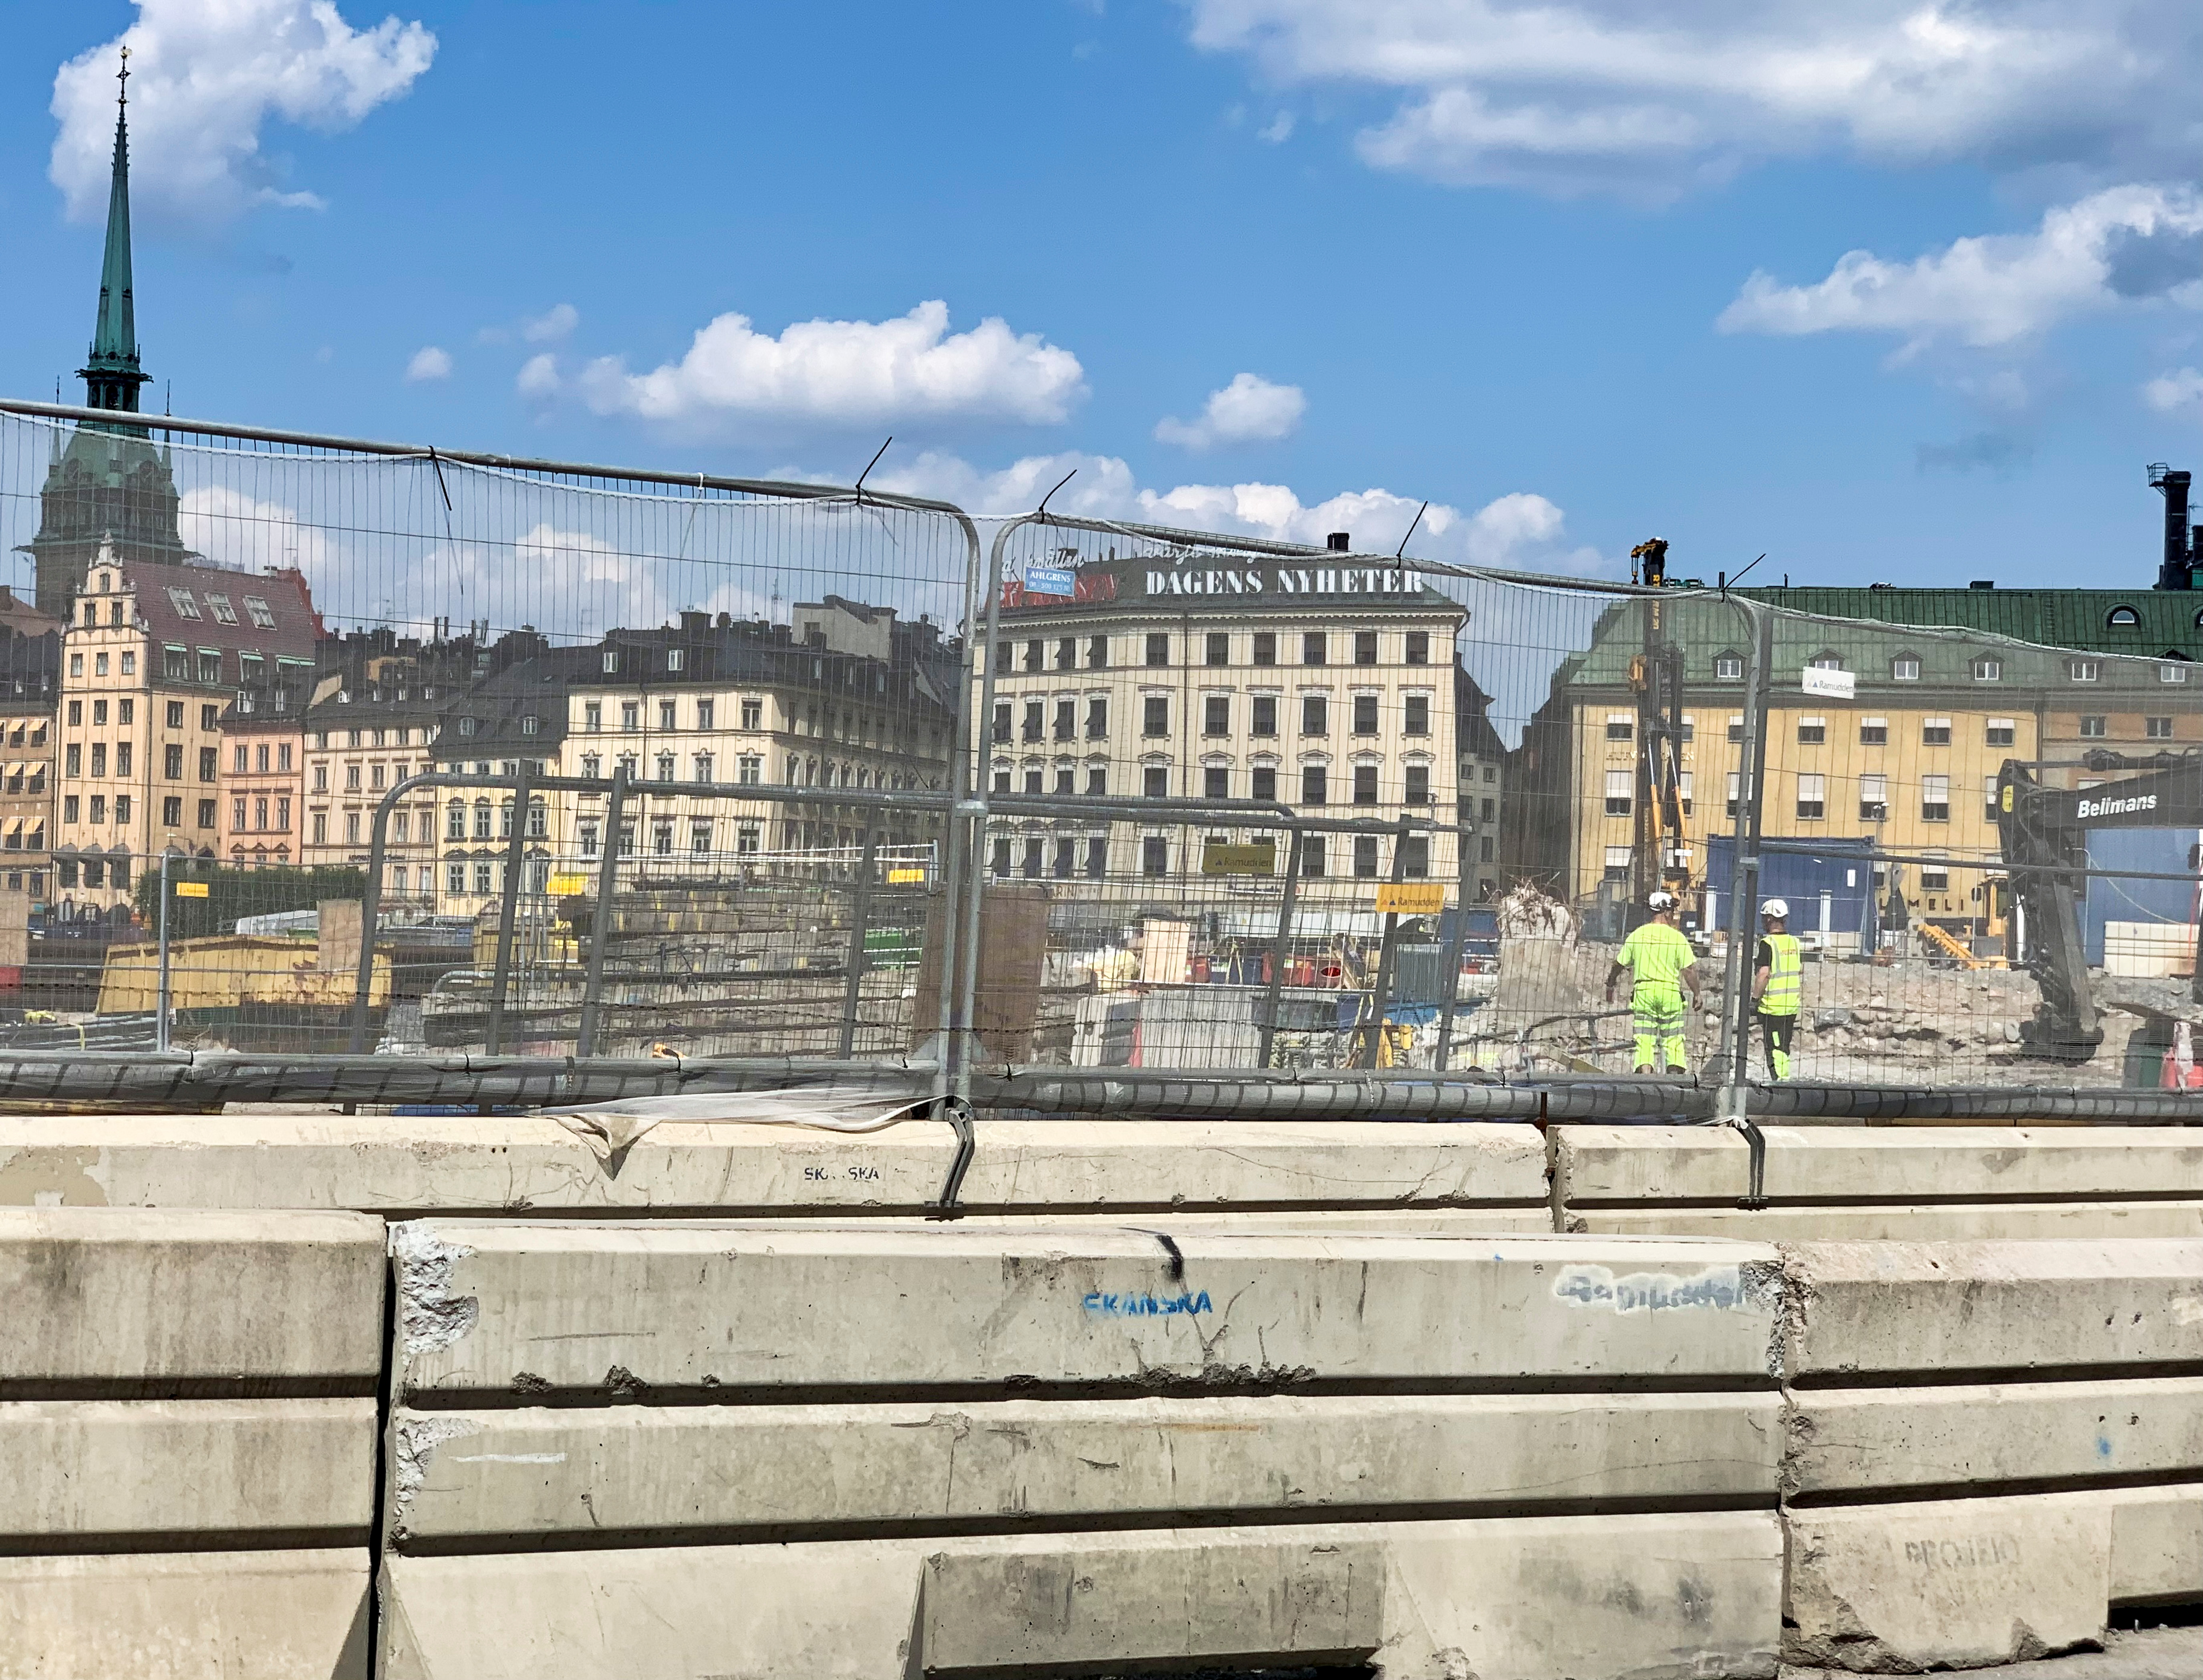 Swedish builder Skanska's logo is seen at the Slussen construction site, in Stockholm